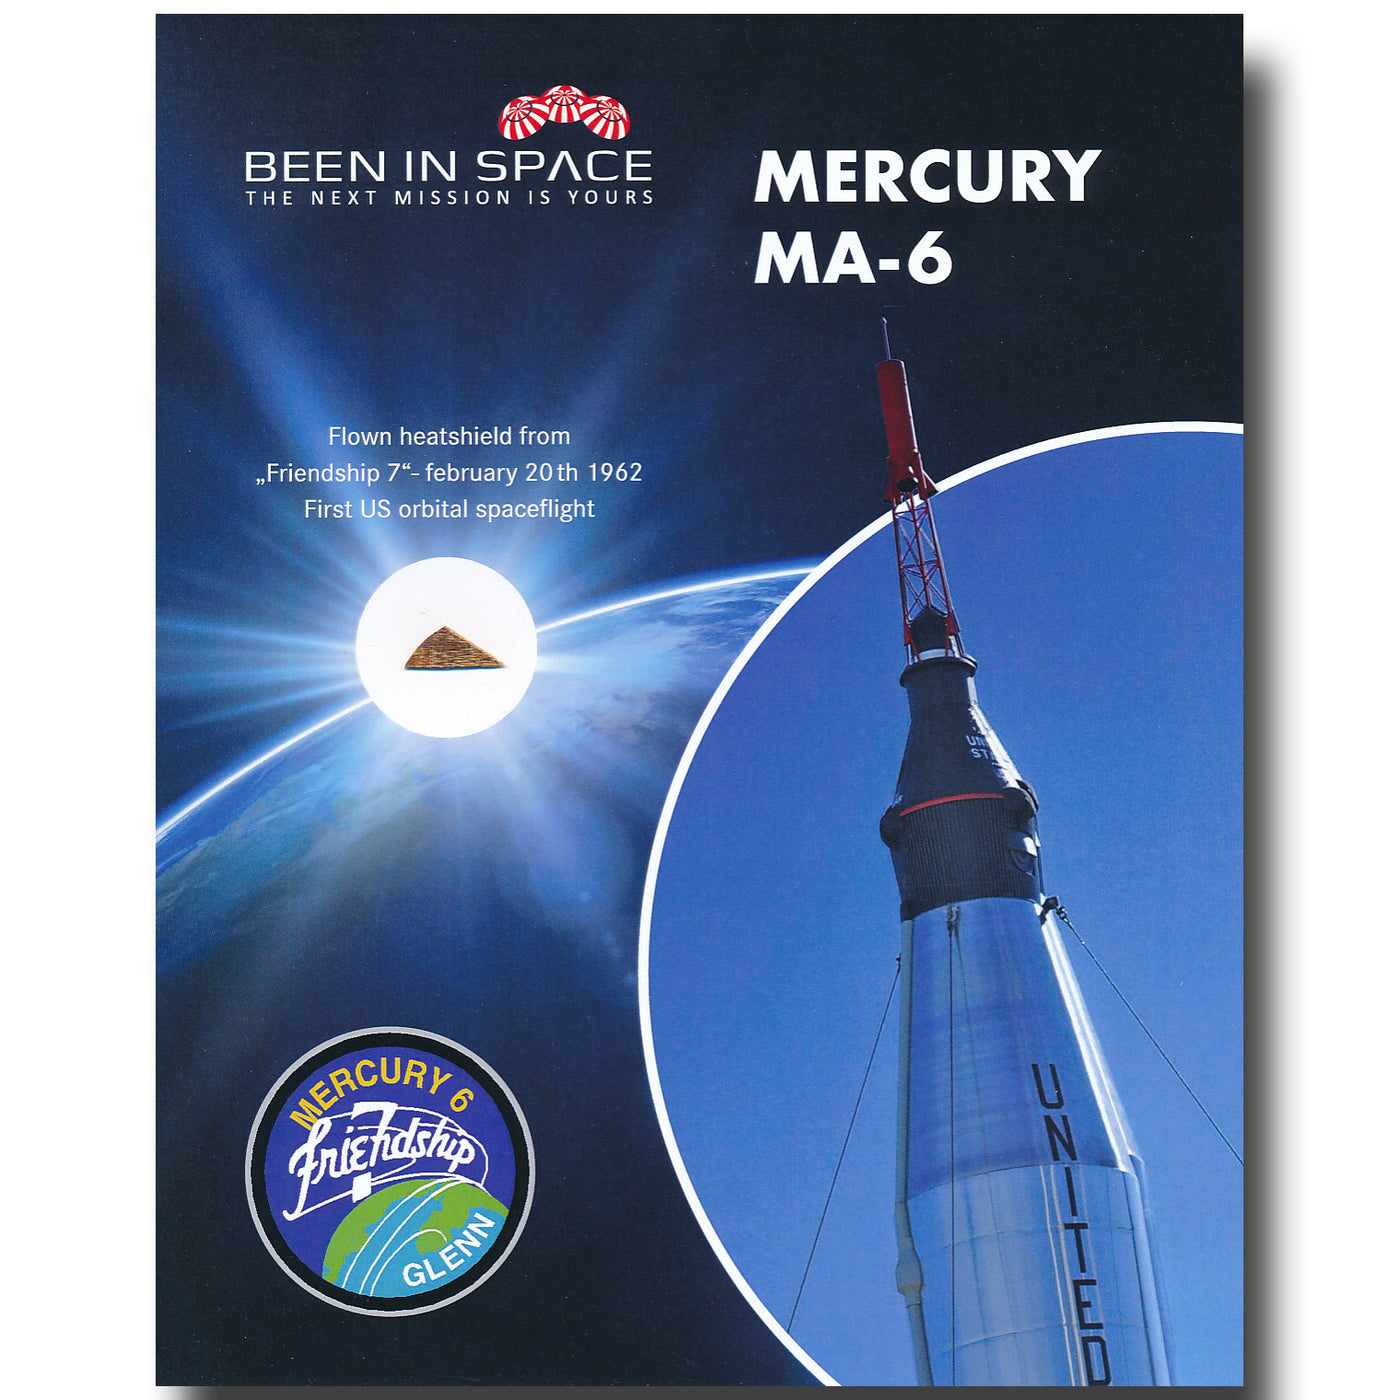 Mercury MA-6 "Friendship 7" John Glenn space flown heatshield presentation